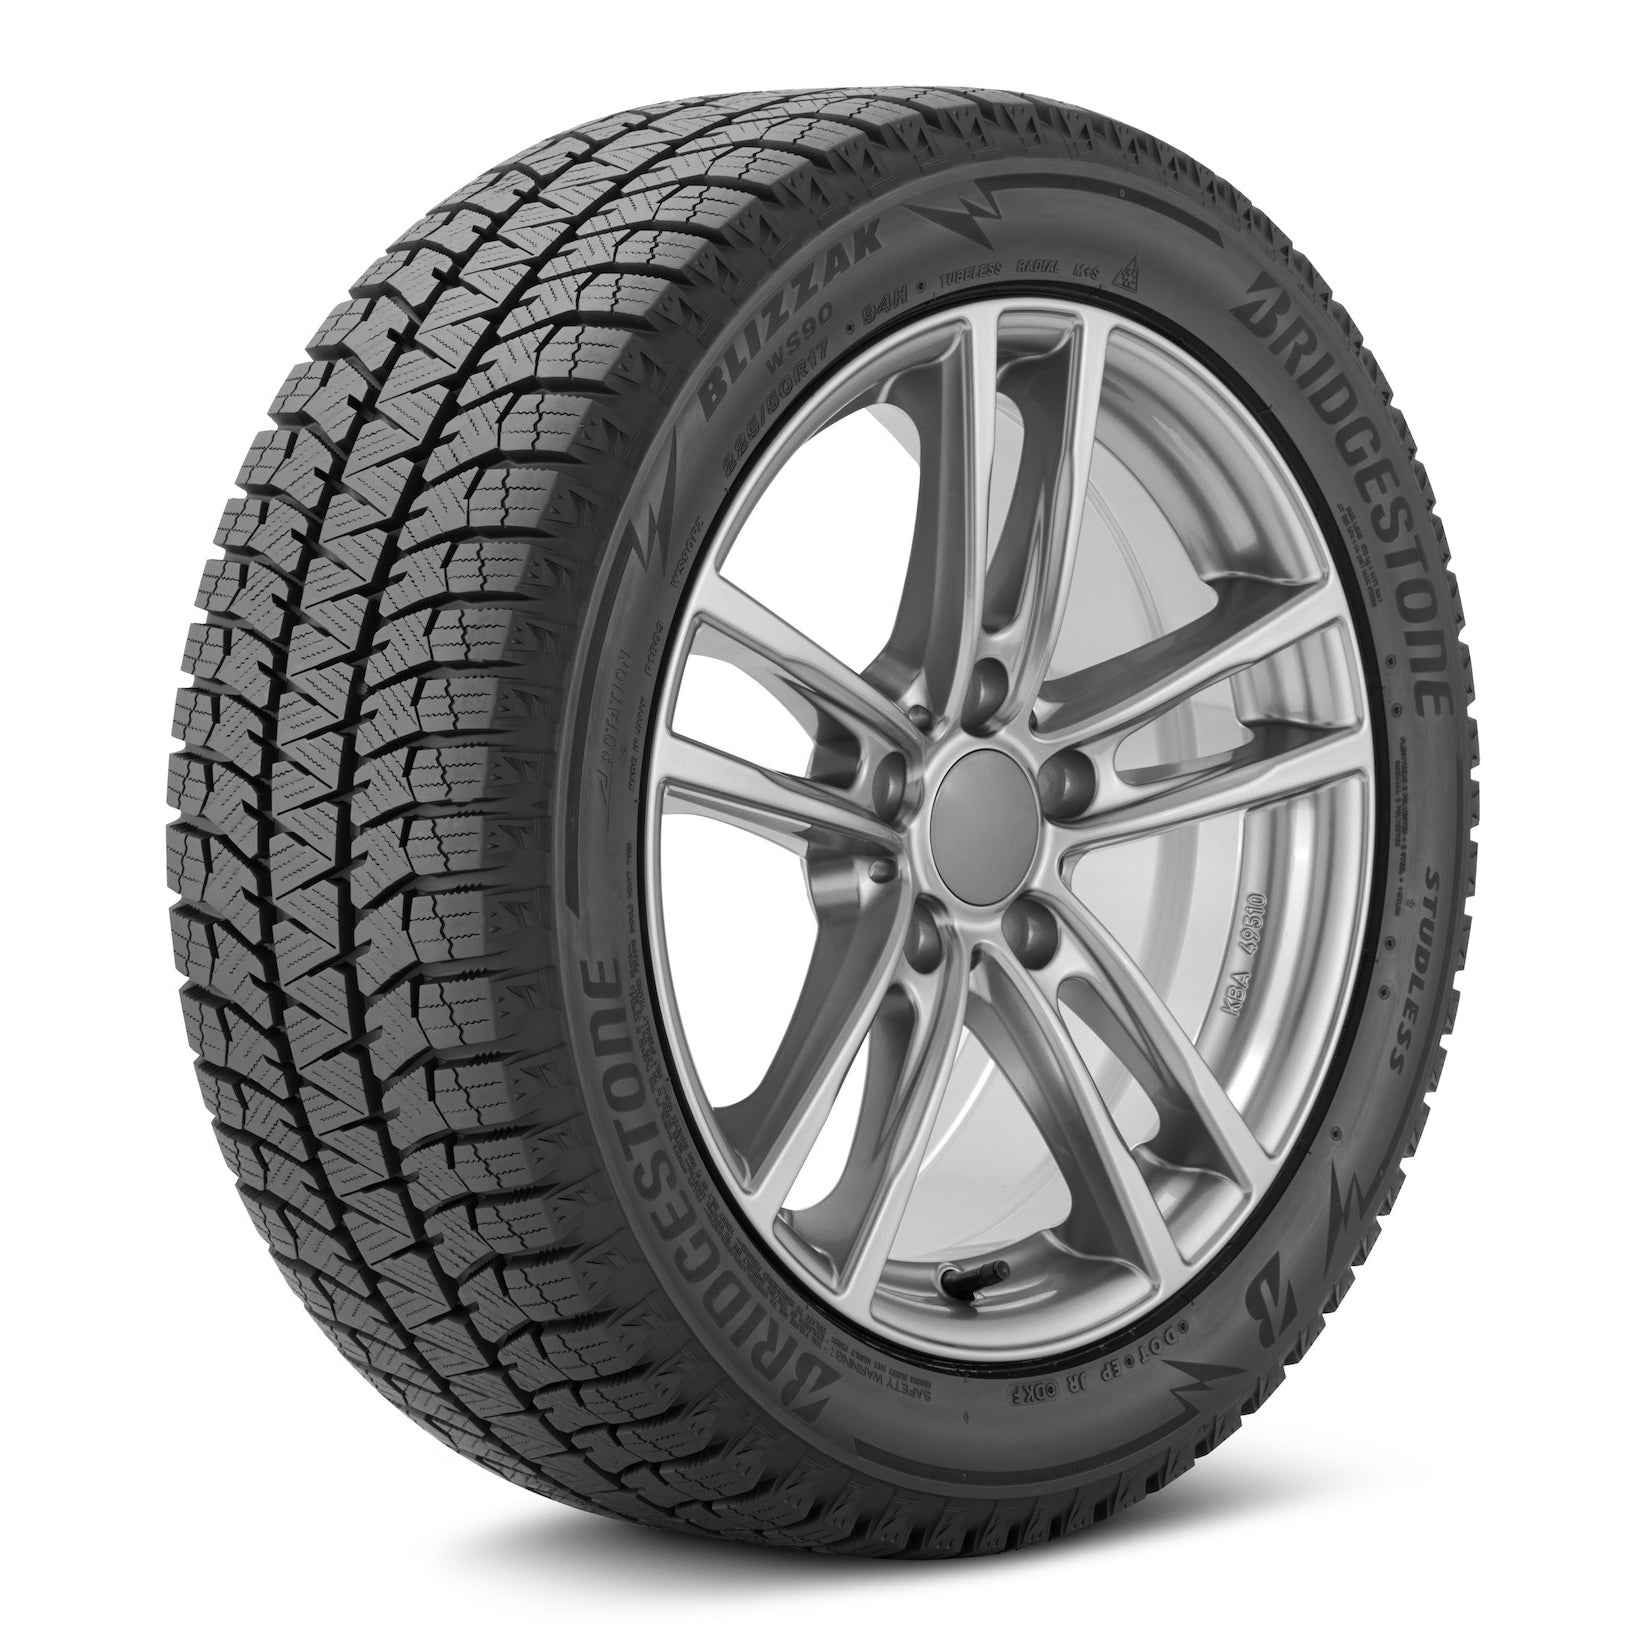 Bridgestone Blizzak WS90 | Winter Tire - Mazda Shop | Genuine 